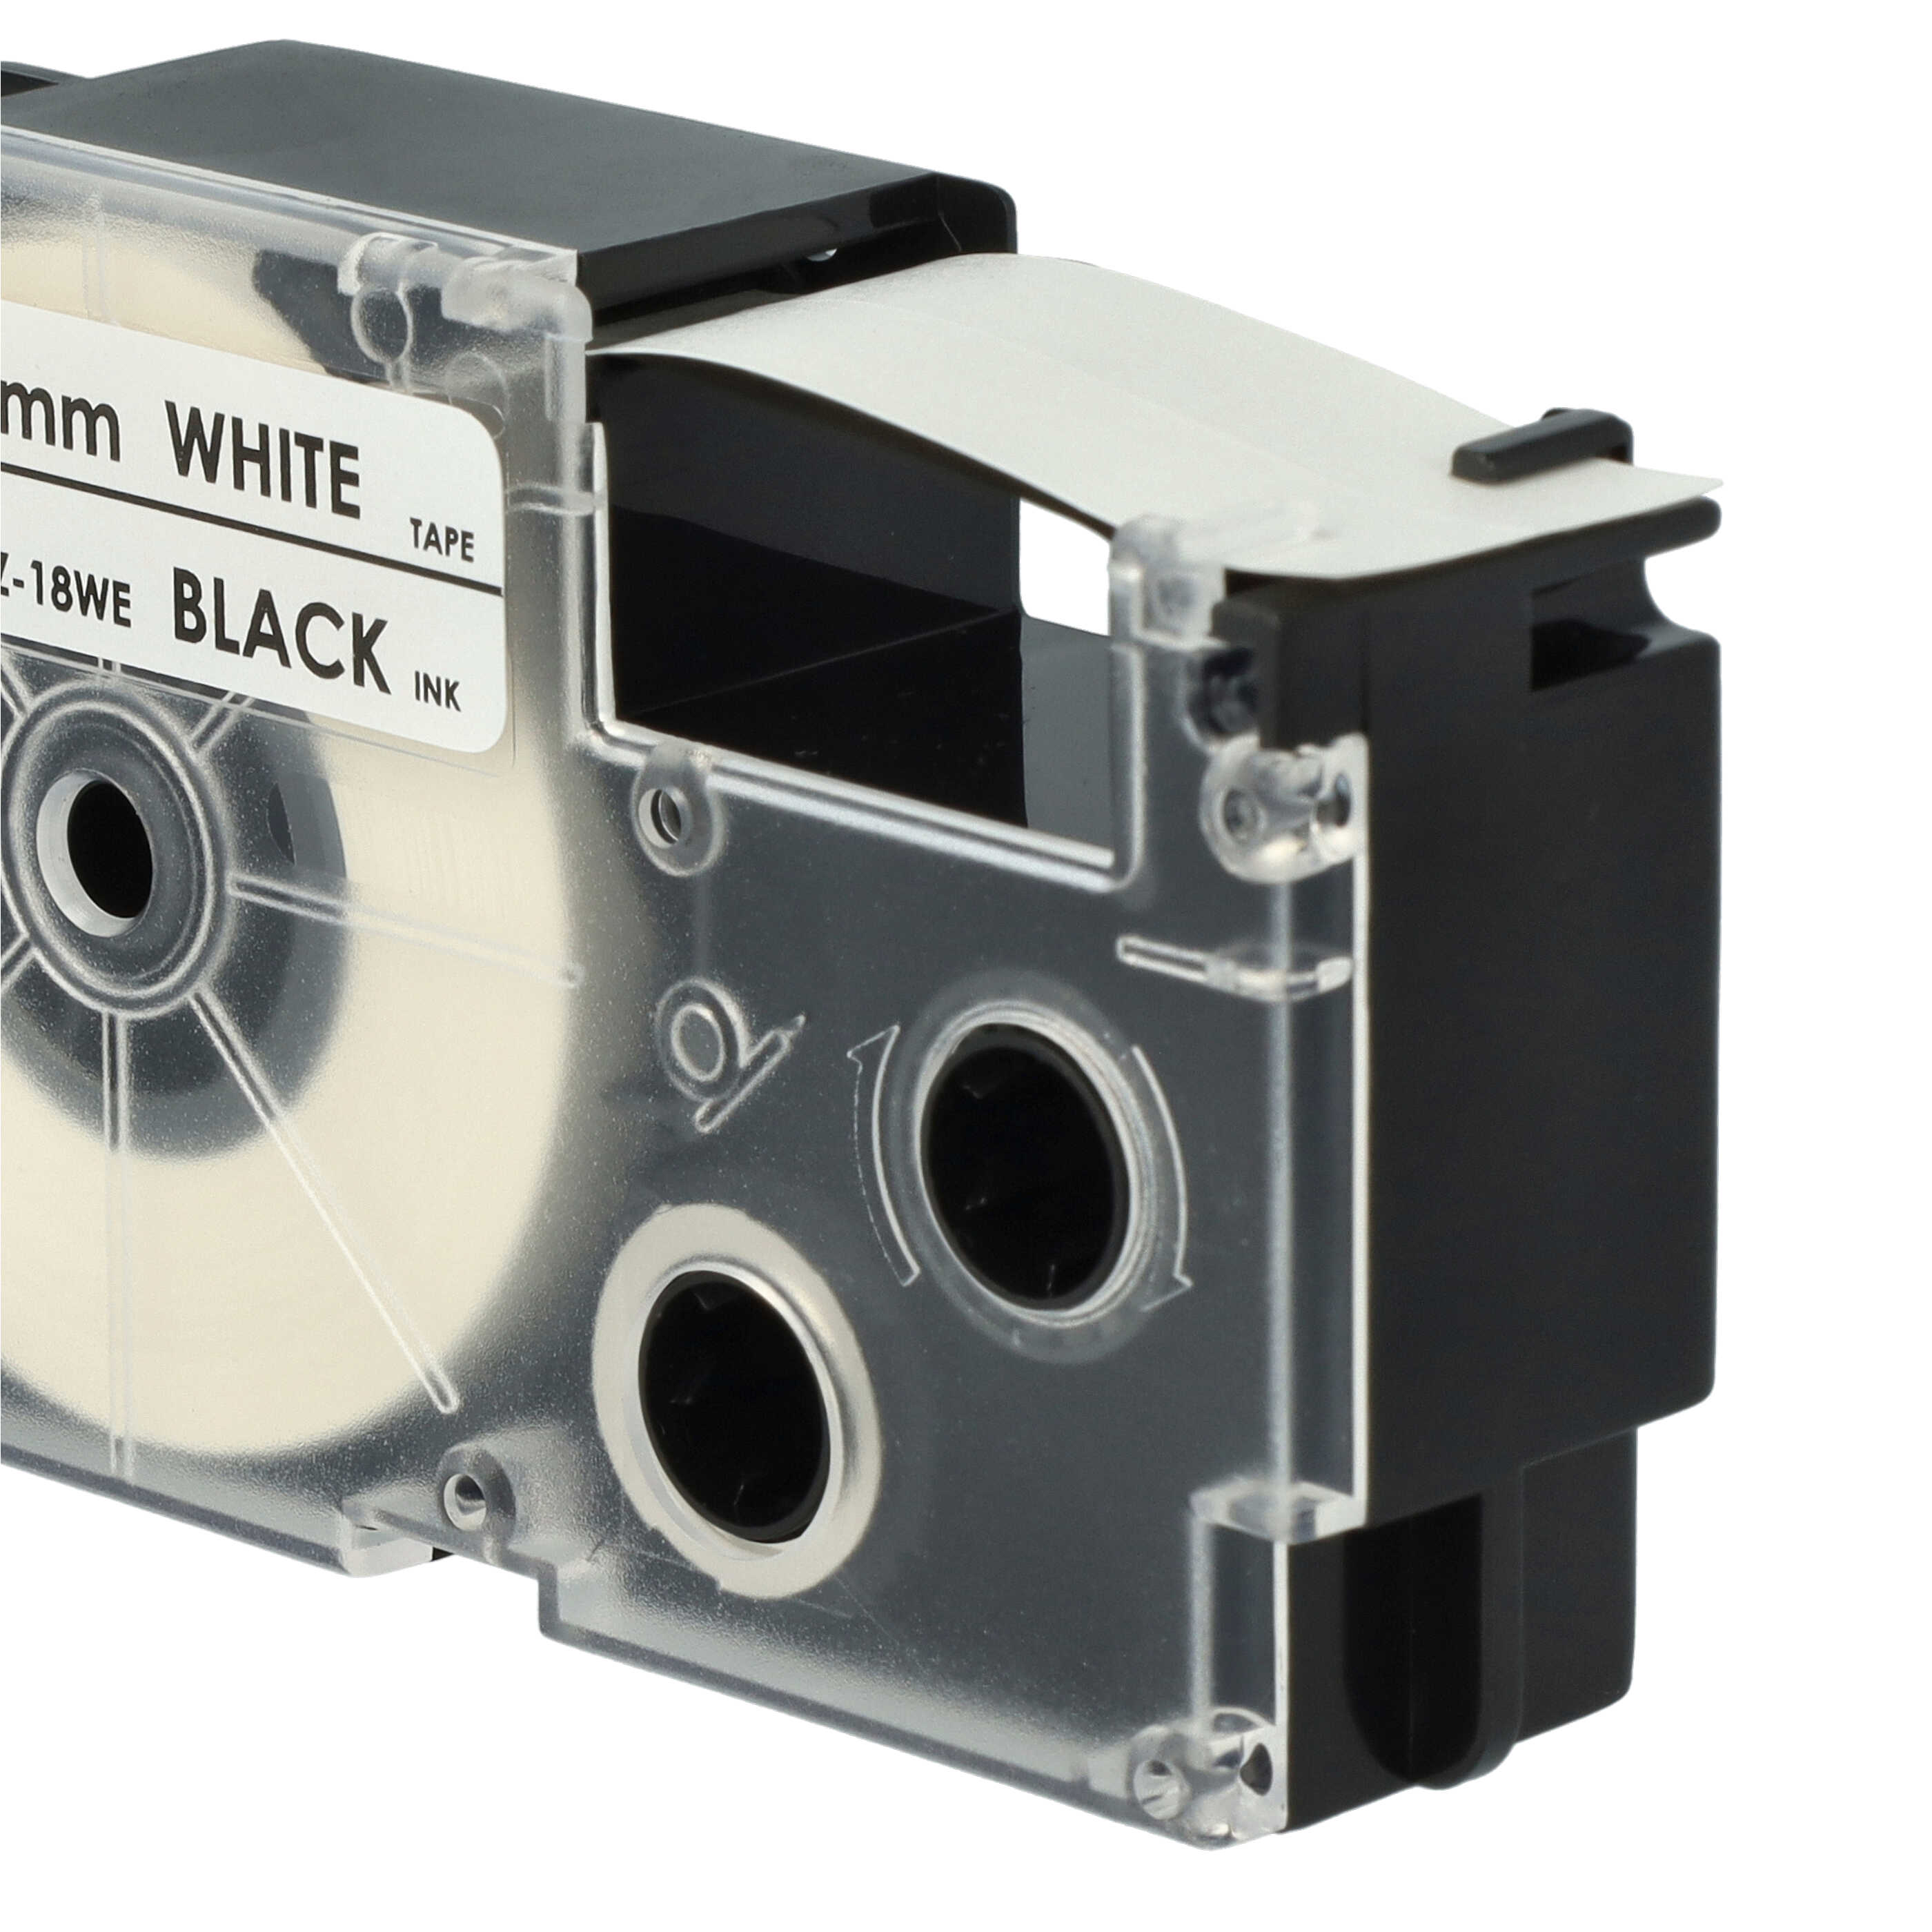 10x Cassetta nastro sostituisce Casio XR-18WE, XR-18WE1 per etichettatrice Casio 18mm nero su bianco